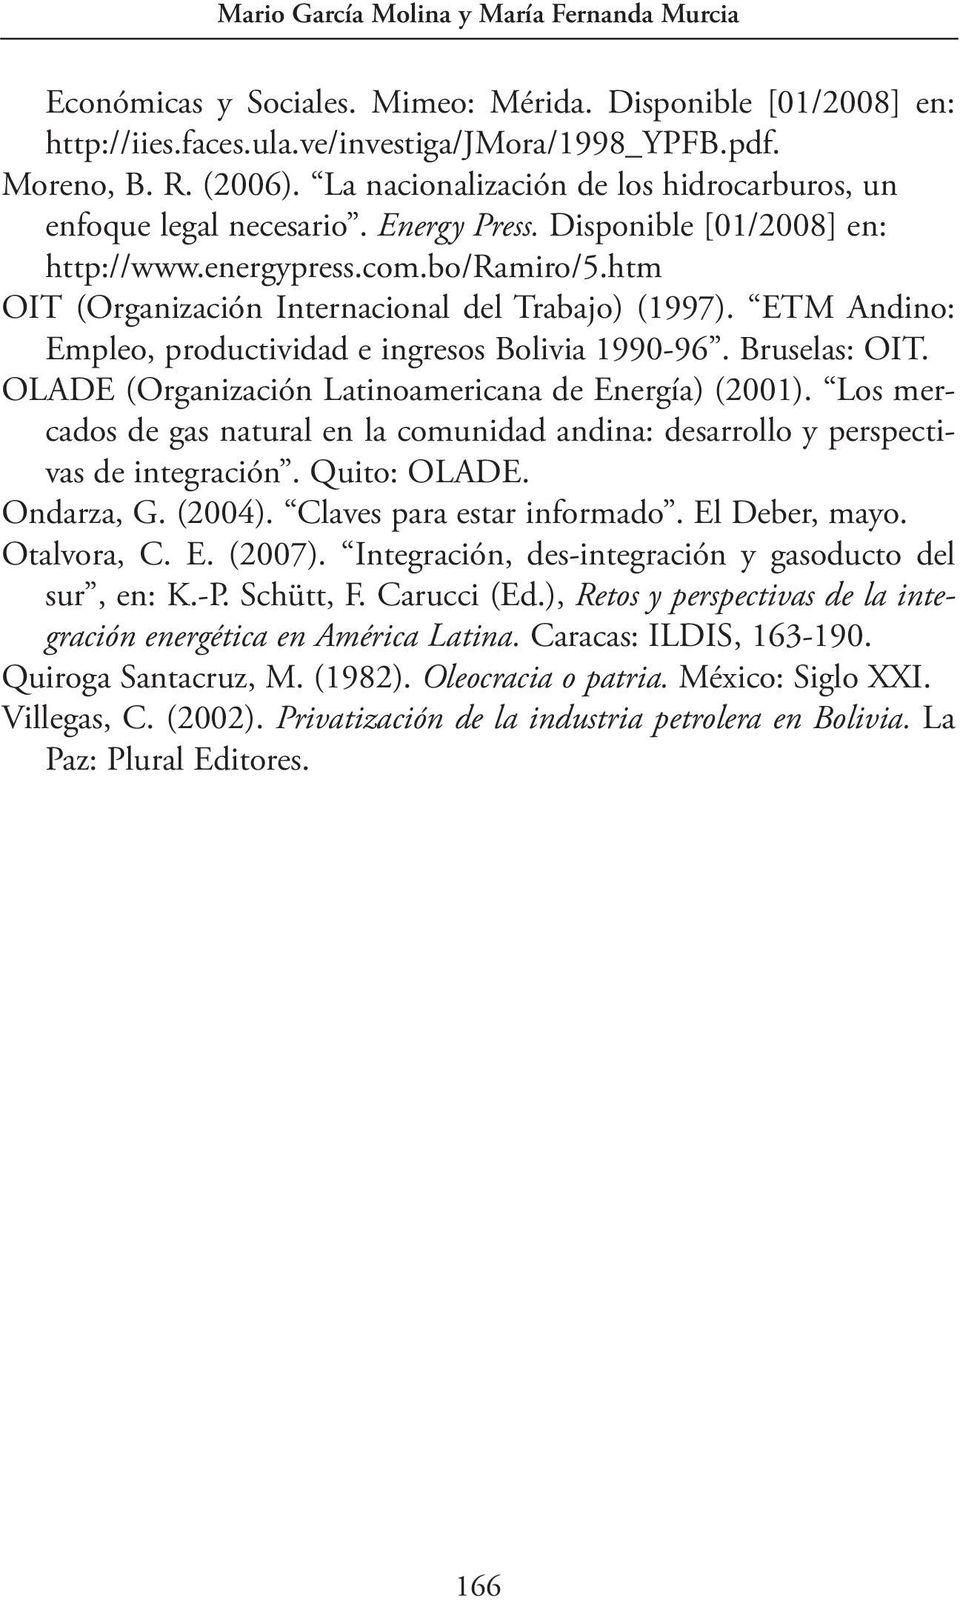 htm OIT (Organización Internacional del Trabajo) (1997). ETM Andino: Empleo, productividad e ingresos Bolivia 1990-96. Bruselas: OIT. OLADE (Organización Latinoamericana de Energía) (2001).